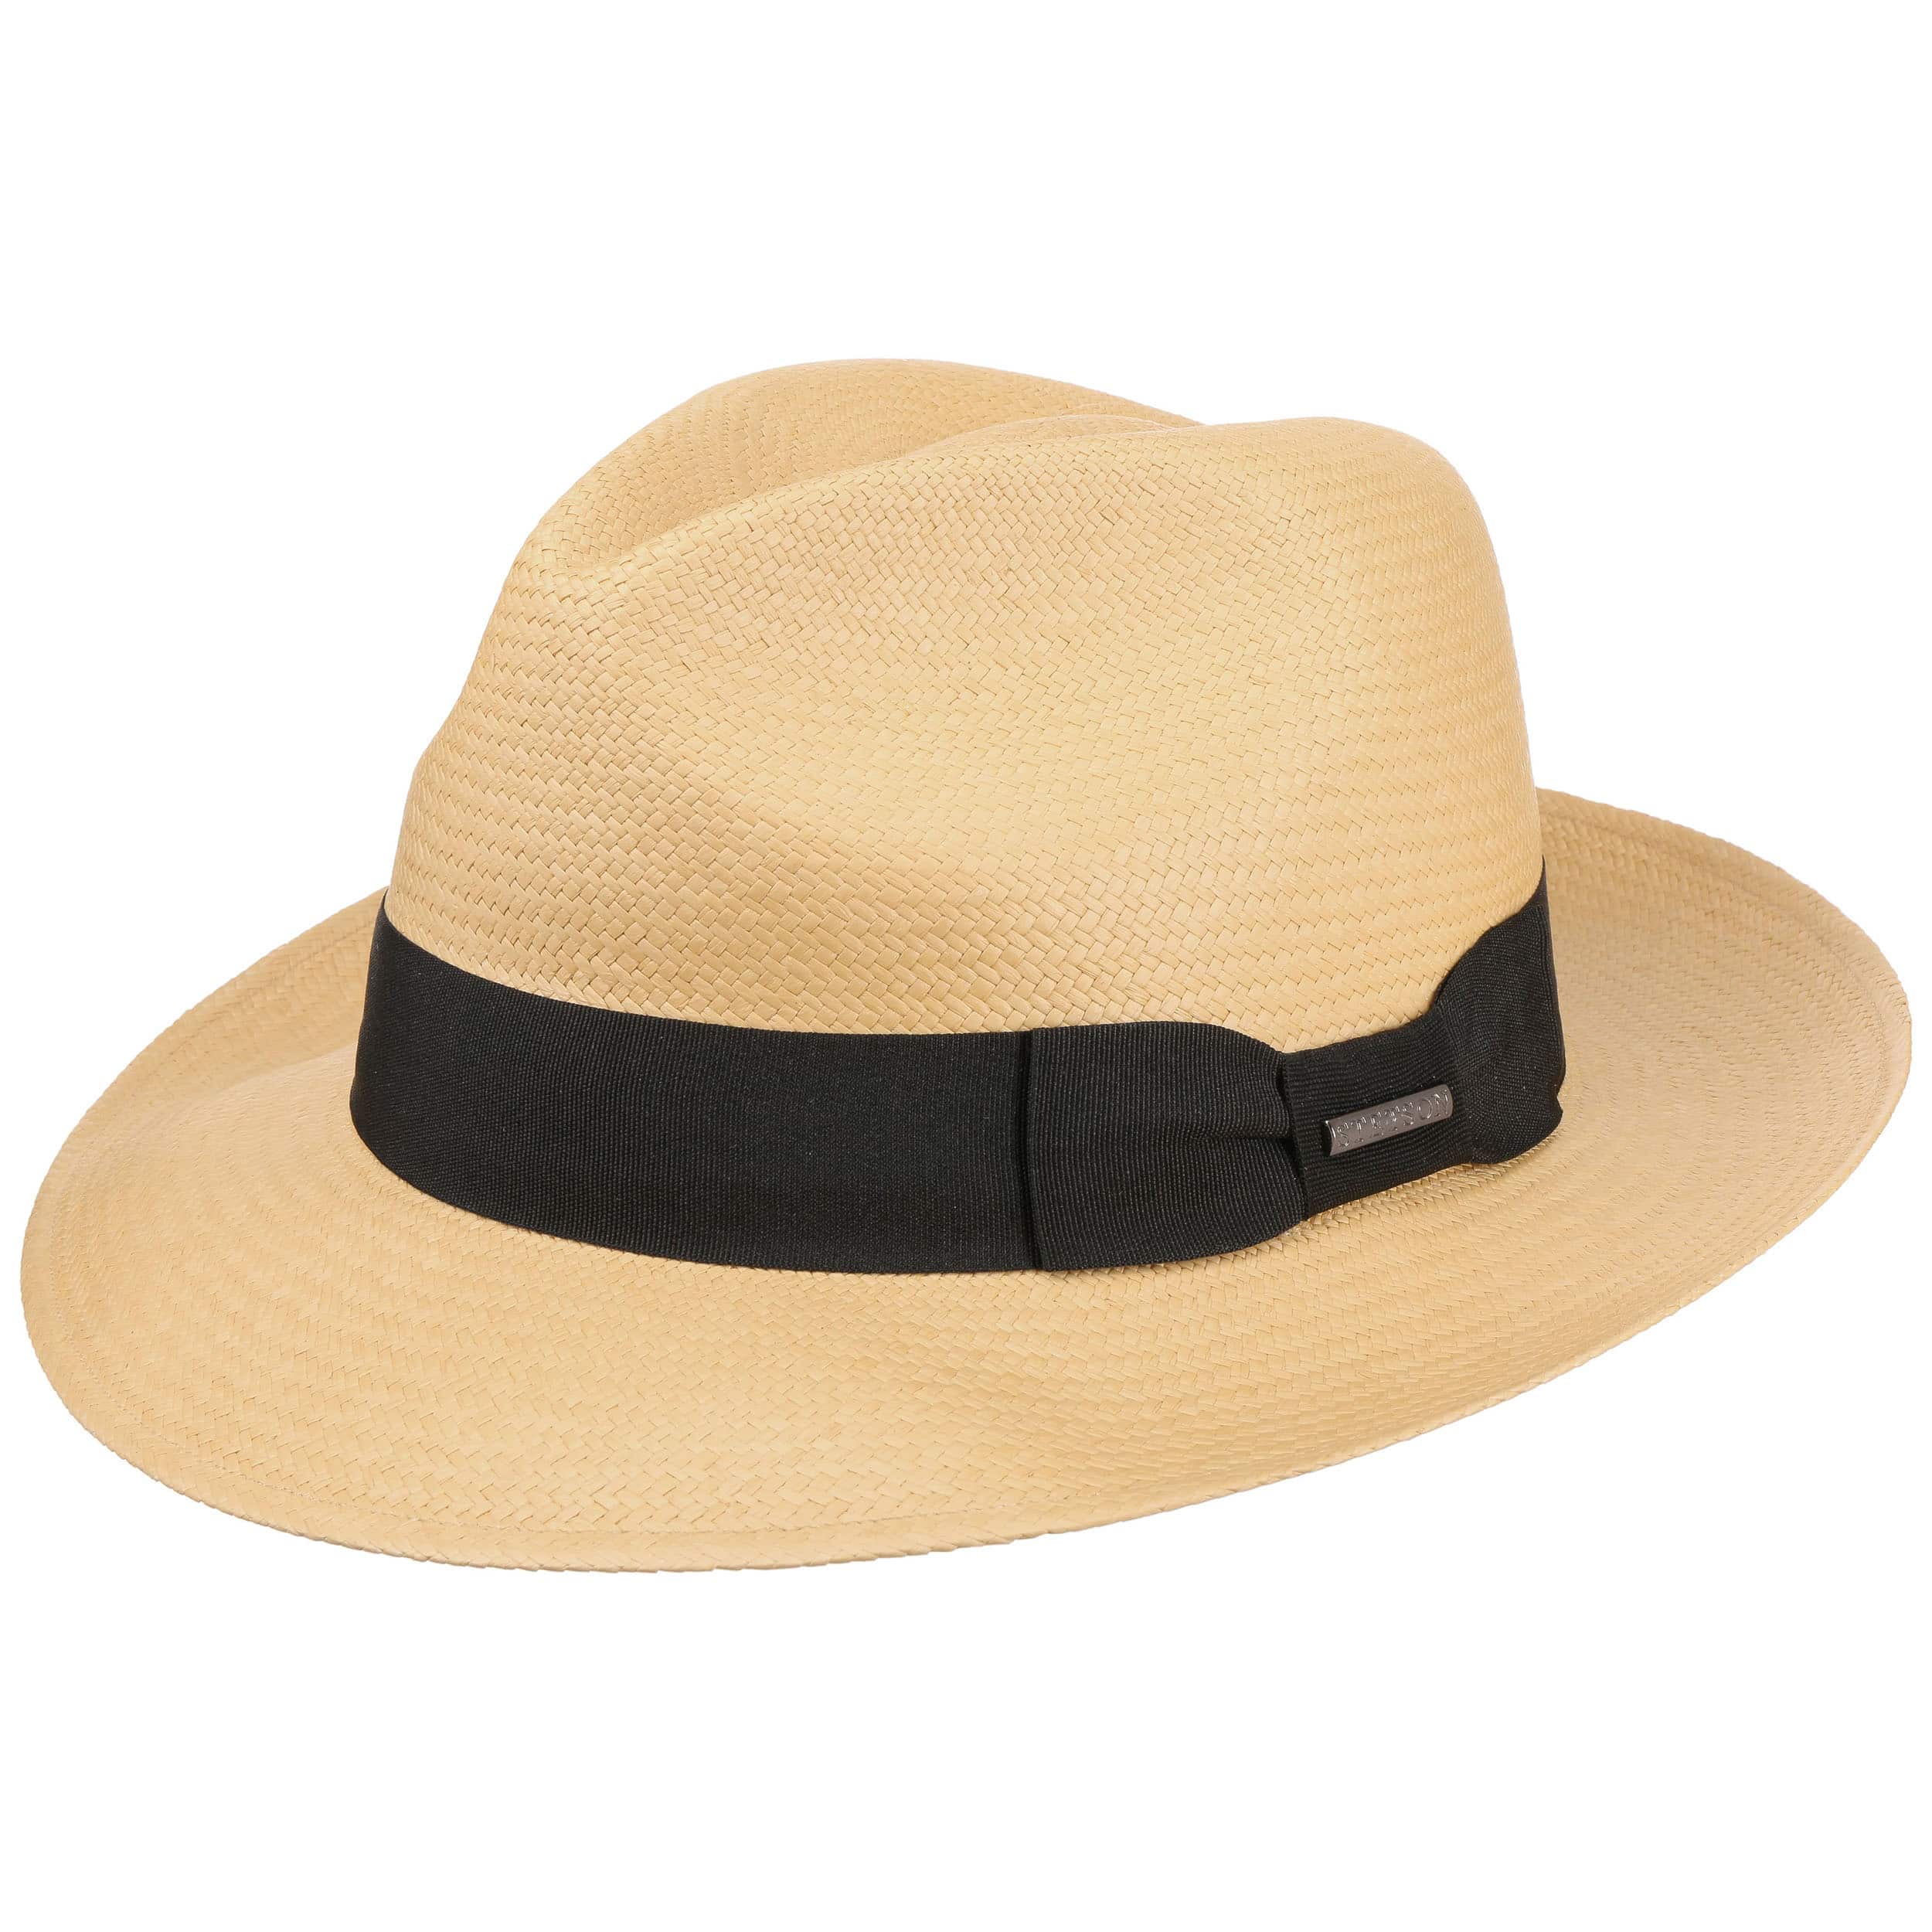 Towson Panama Hat by Stetson - 129,00